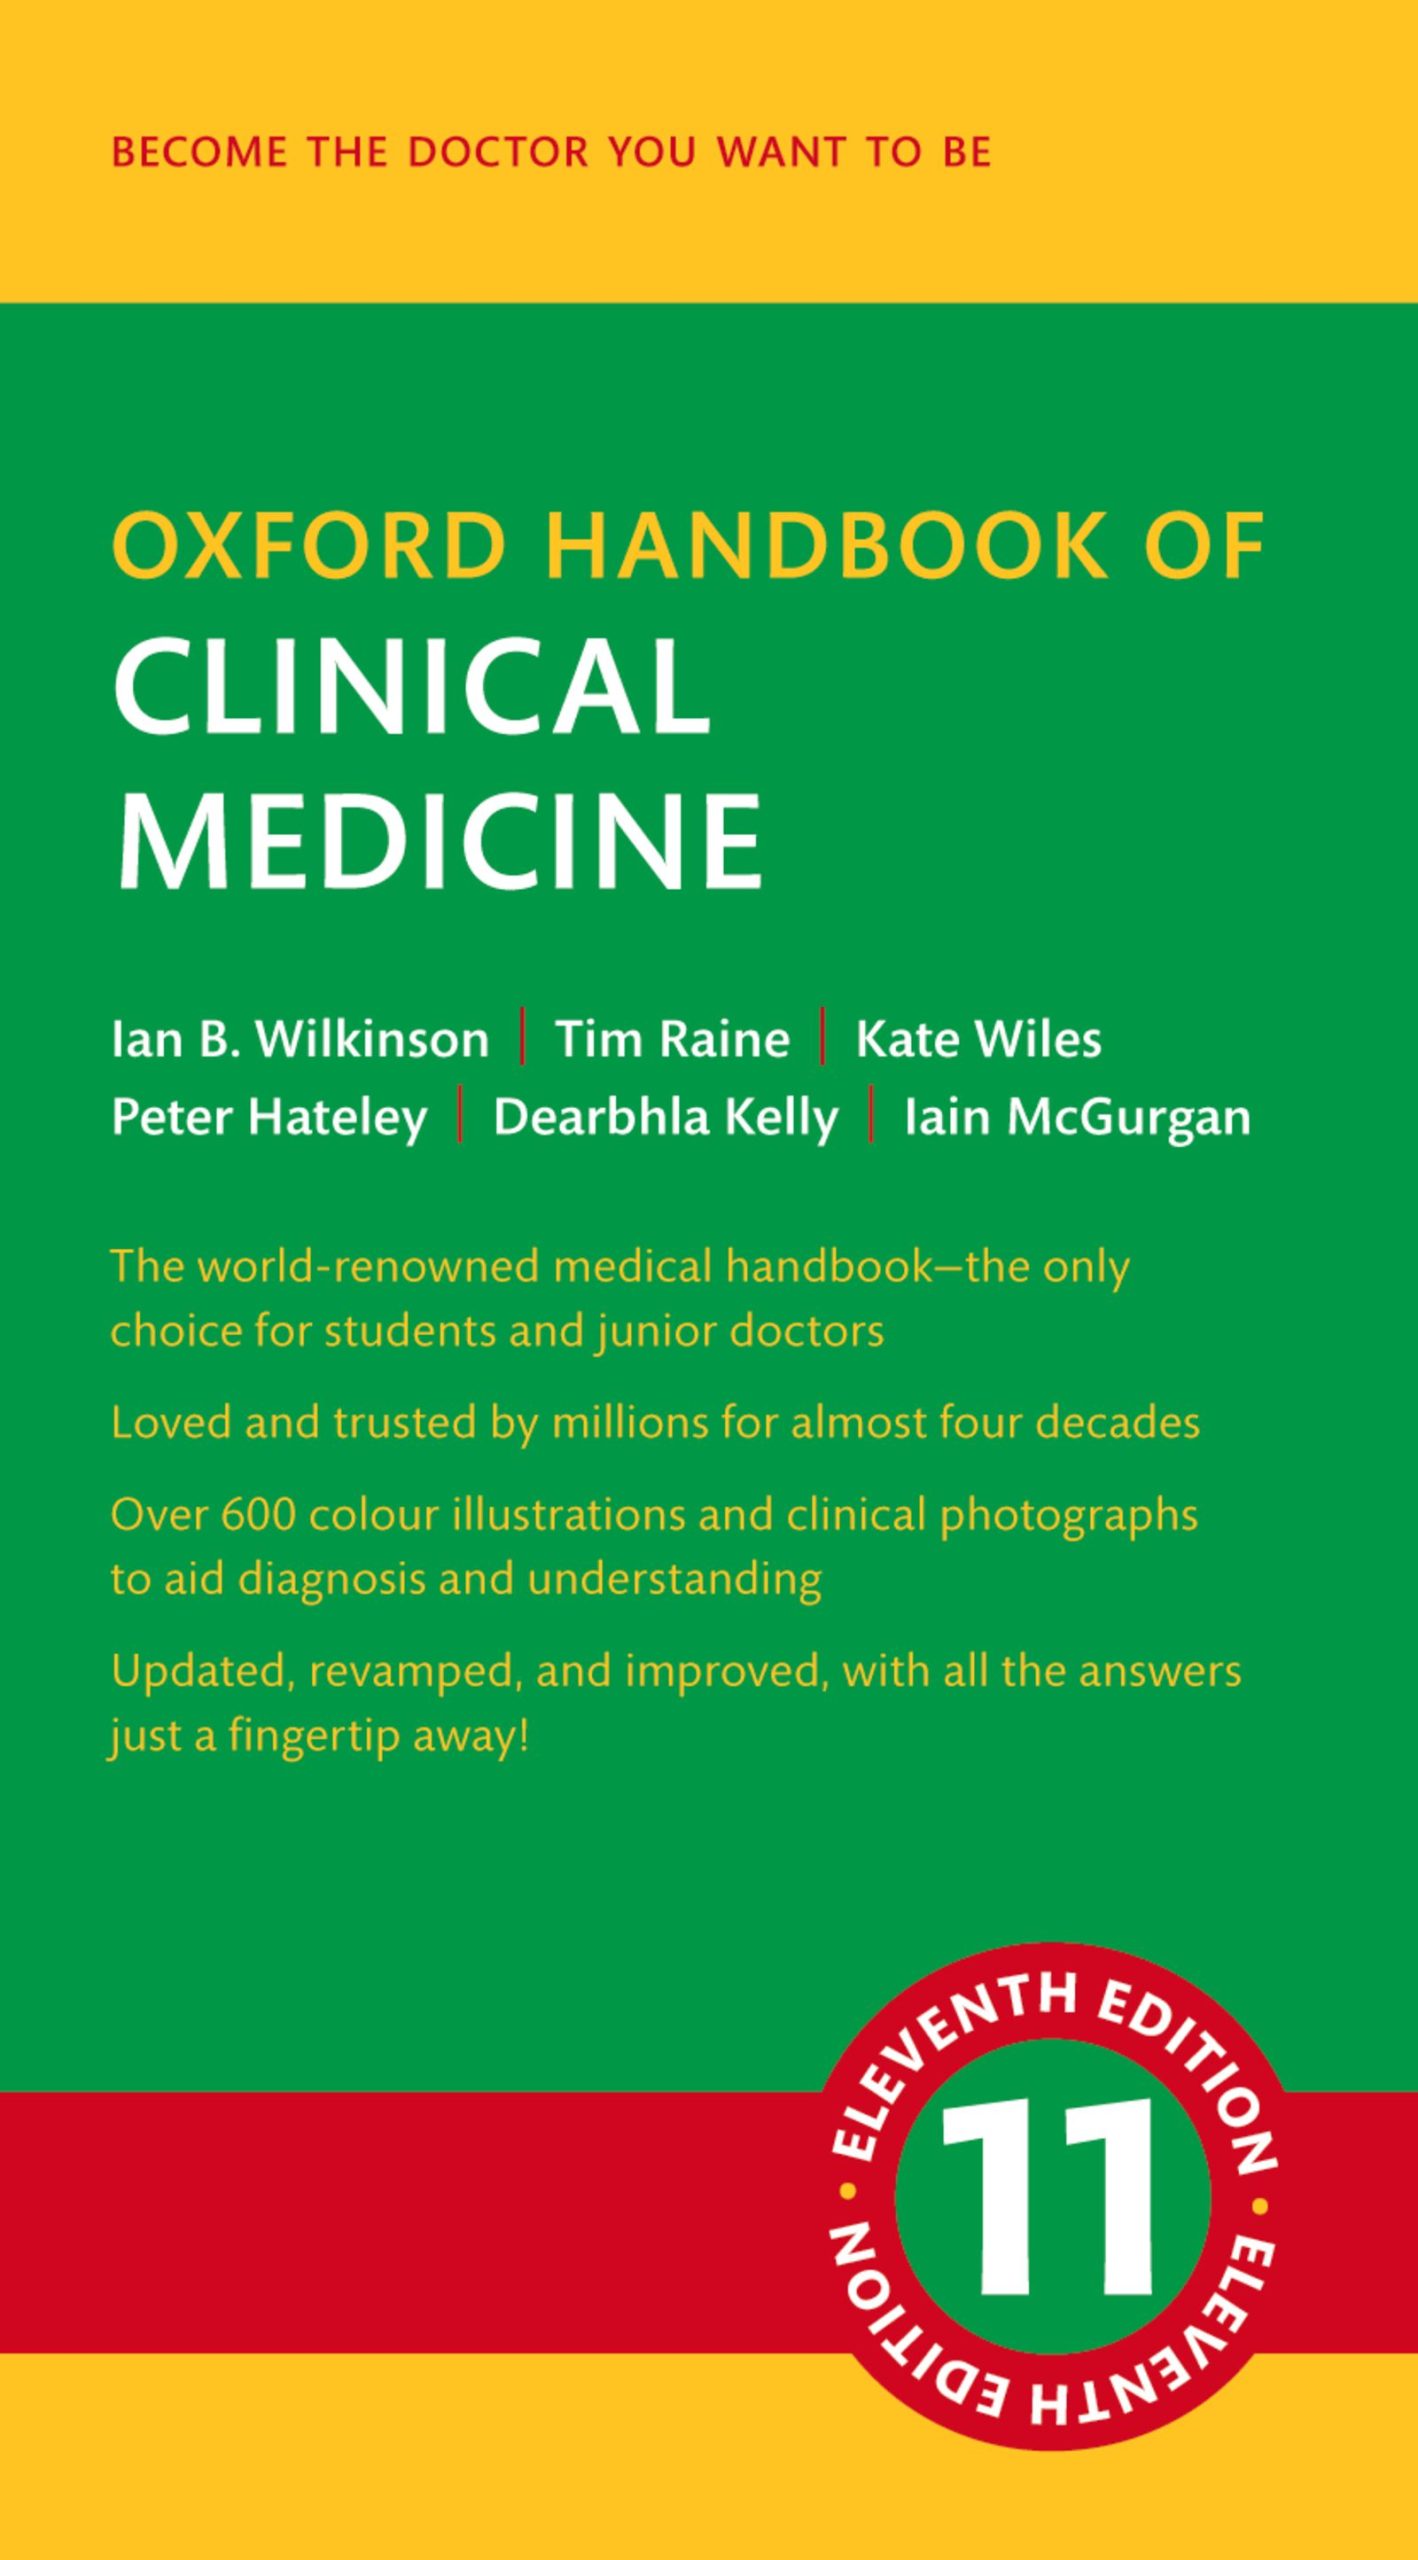 Oxford Handbook Of Clinical Medicine, International Edition, 11th Edition (Original PDF From Publisher)